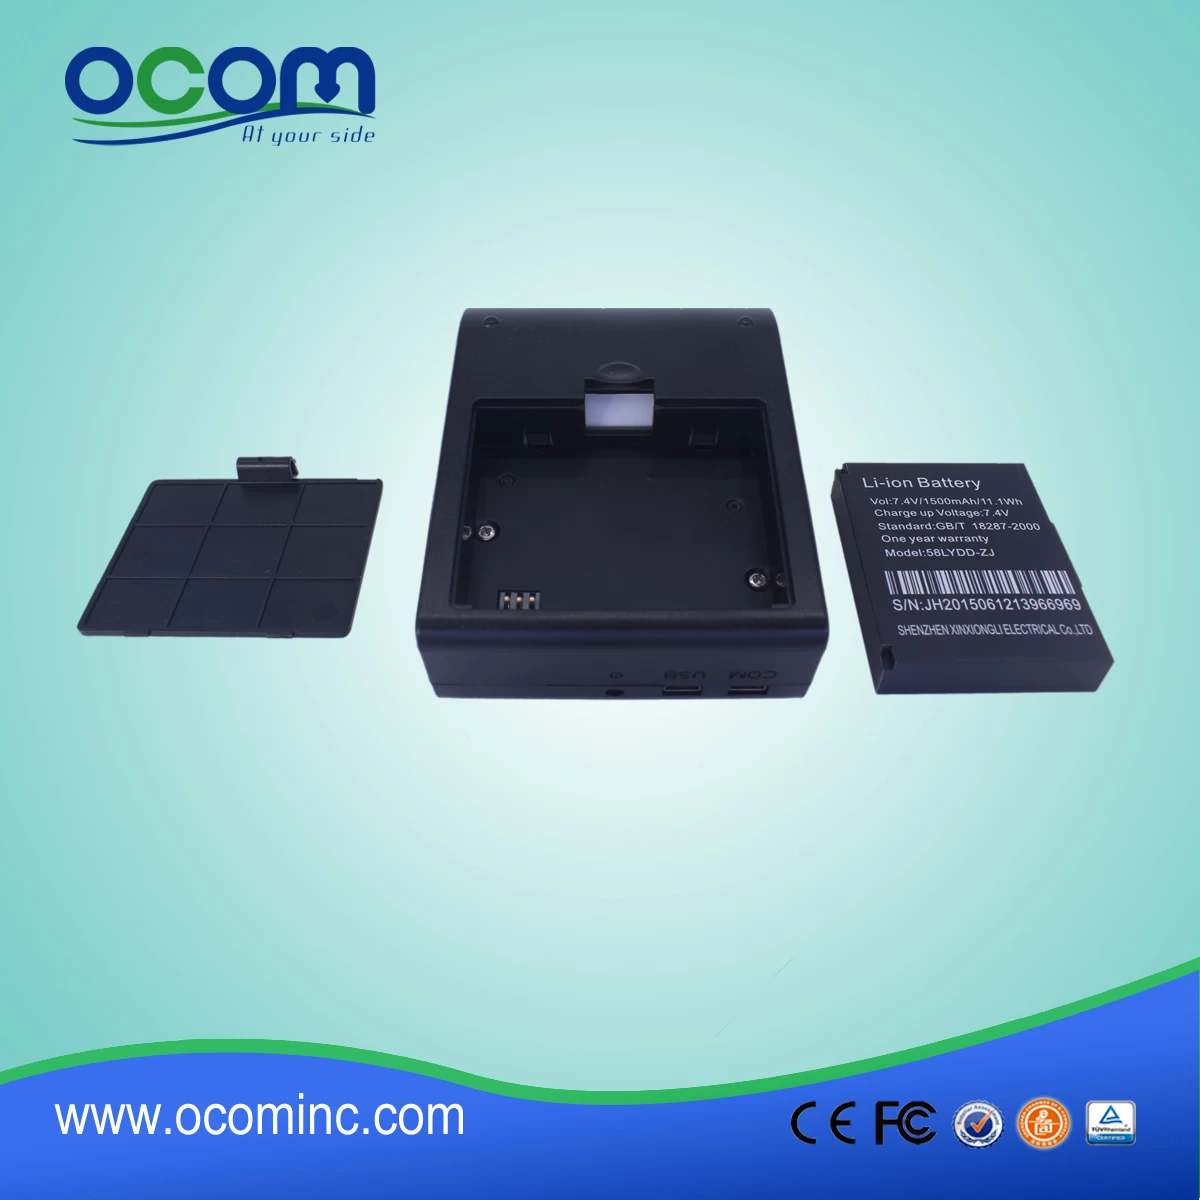 (OCPP-M06) OCOM Hot selling bluetooth  pos printer,  pos printer 58